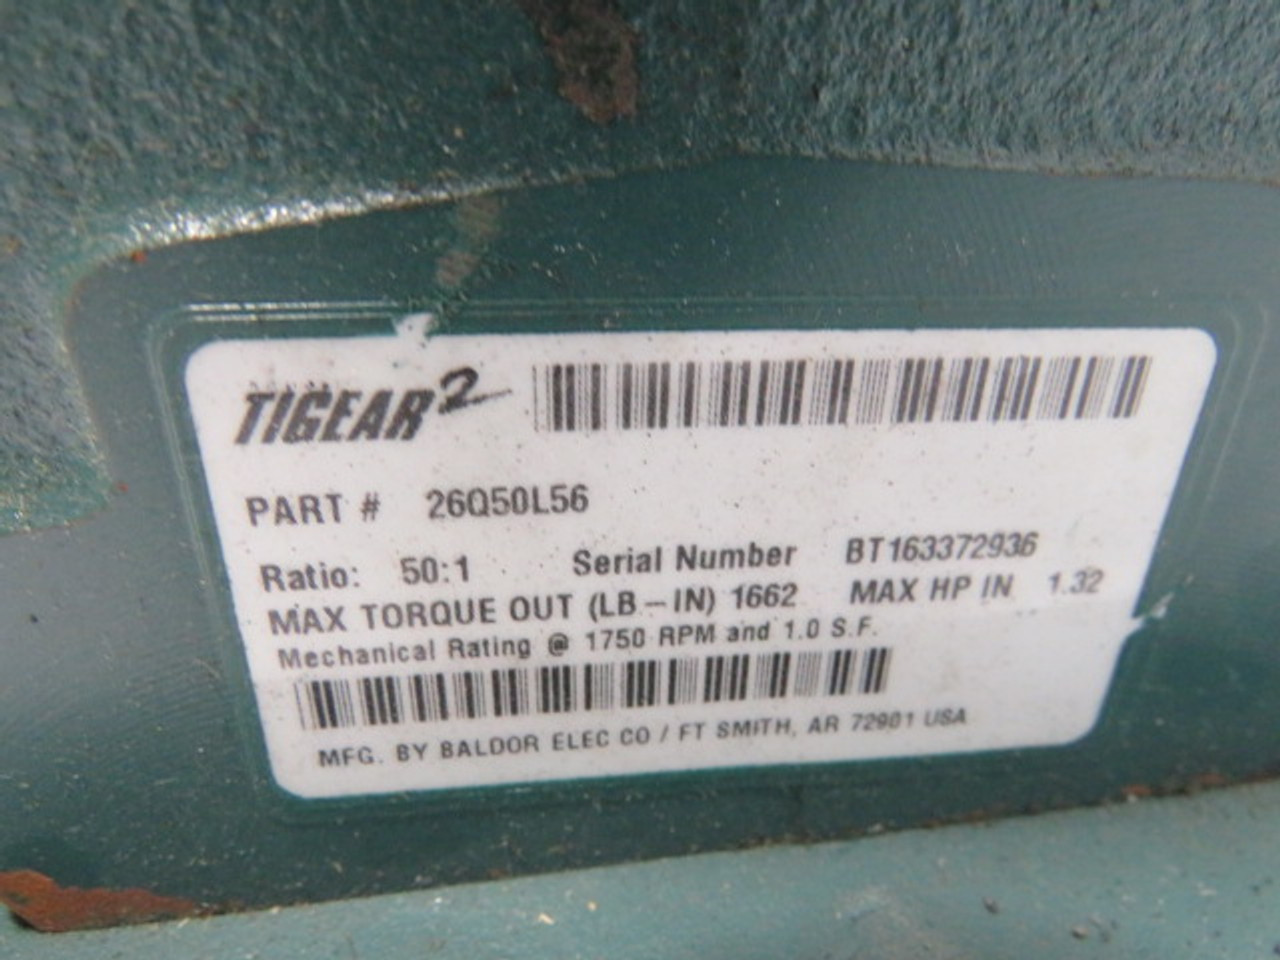 Dodge Tigear 26Q50L56 Gear Reducer 50:1 Ratio 1662lb-in 1.32HP@1750rpm USED